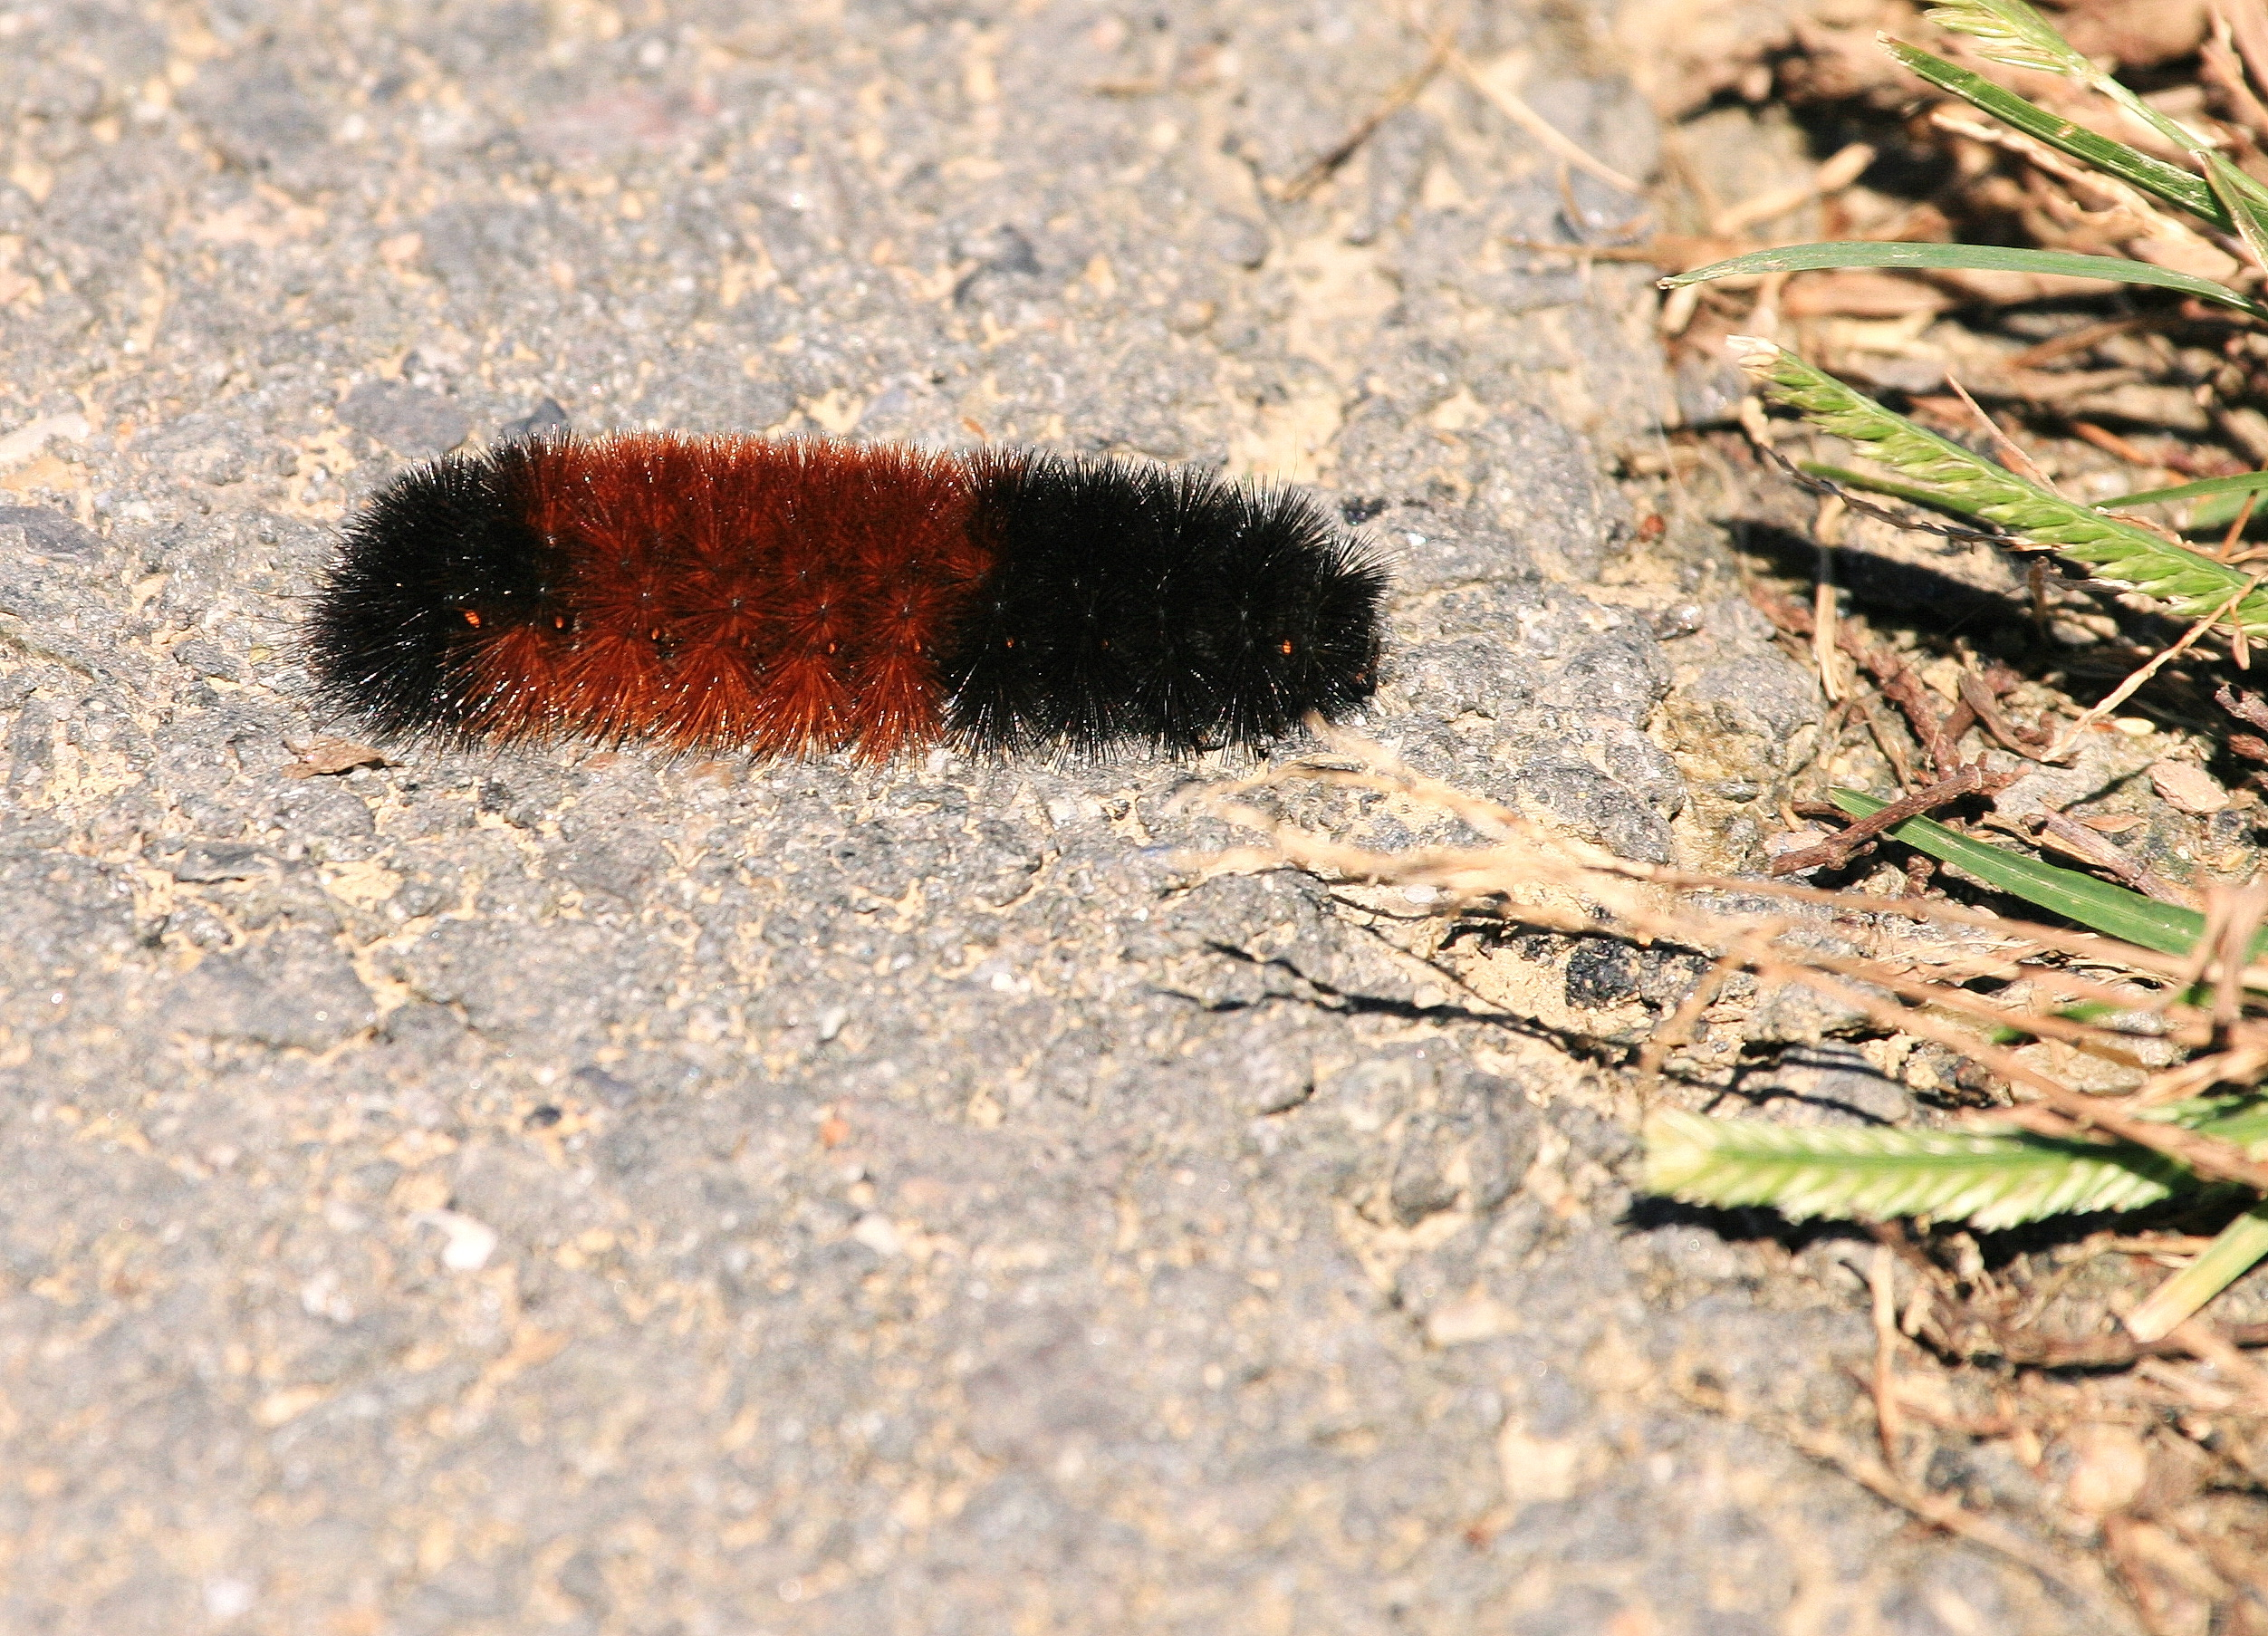 Woolly bear caterpillar on the move